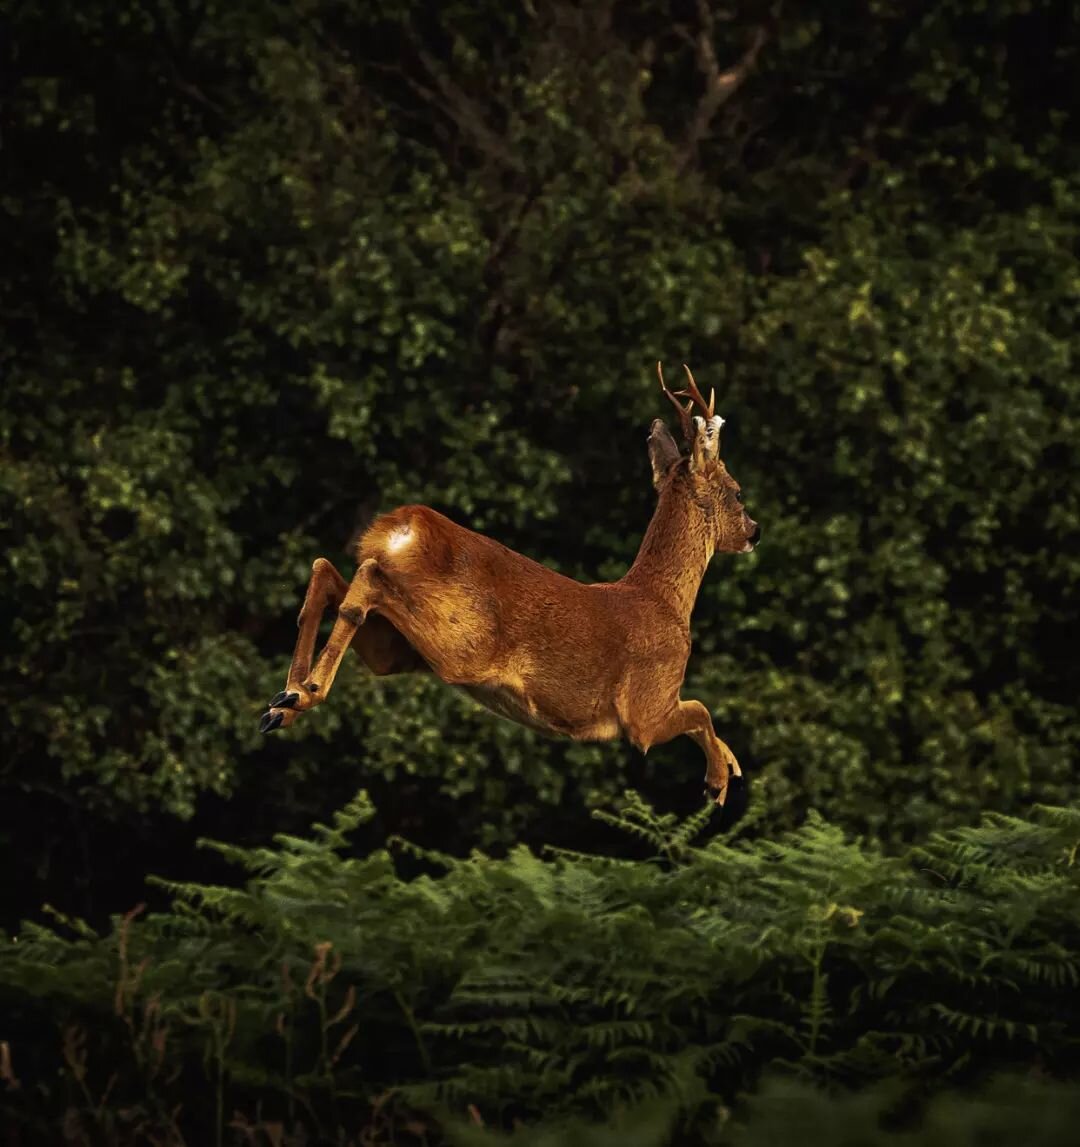 Taking a leap.
.
.
.
.
.
.
#roedeer #deer #wildlife #wildlifephotography #nature #naturephotography #wildplaces #igscotland #instascotland #instanature #bestnatureshots #outofwild #nature_brilliance #awesome_earthpix #sigma150600 #sonya7iii #getoutsi